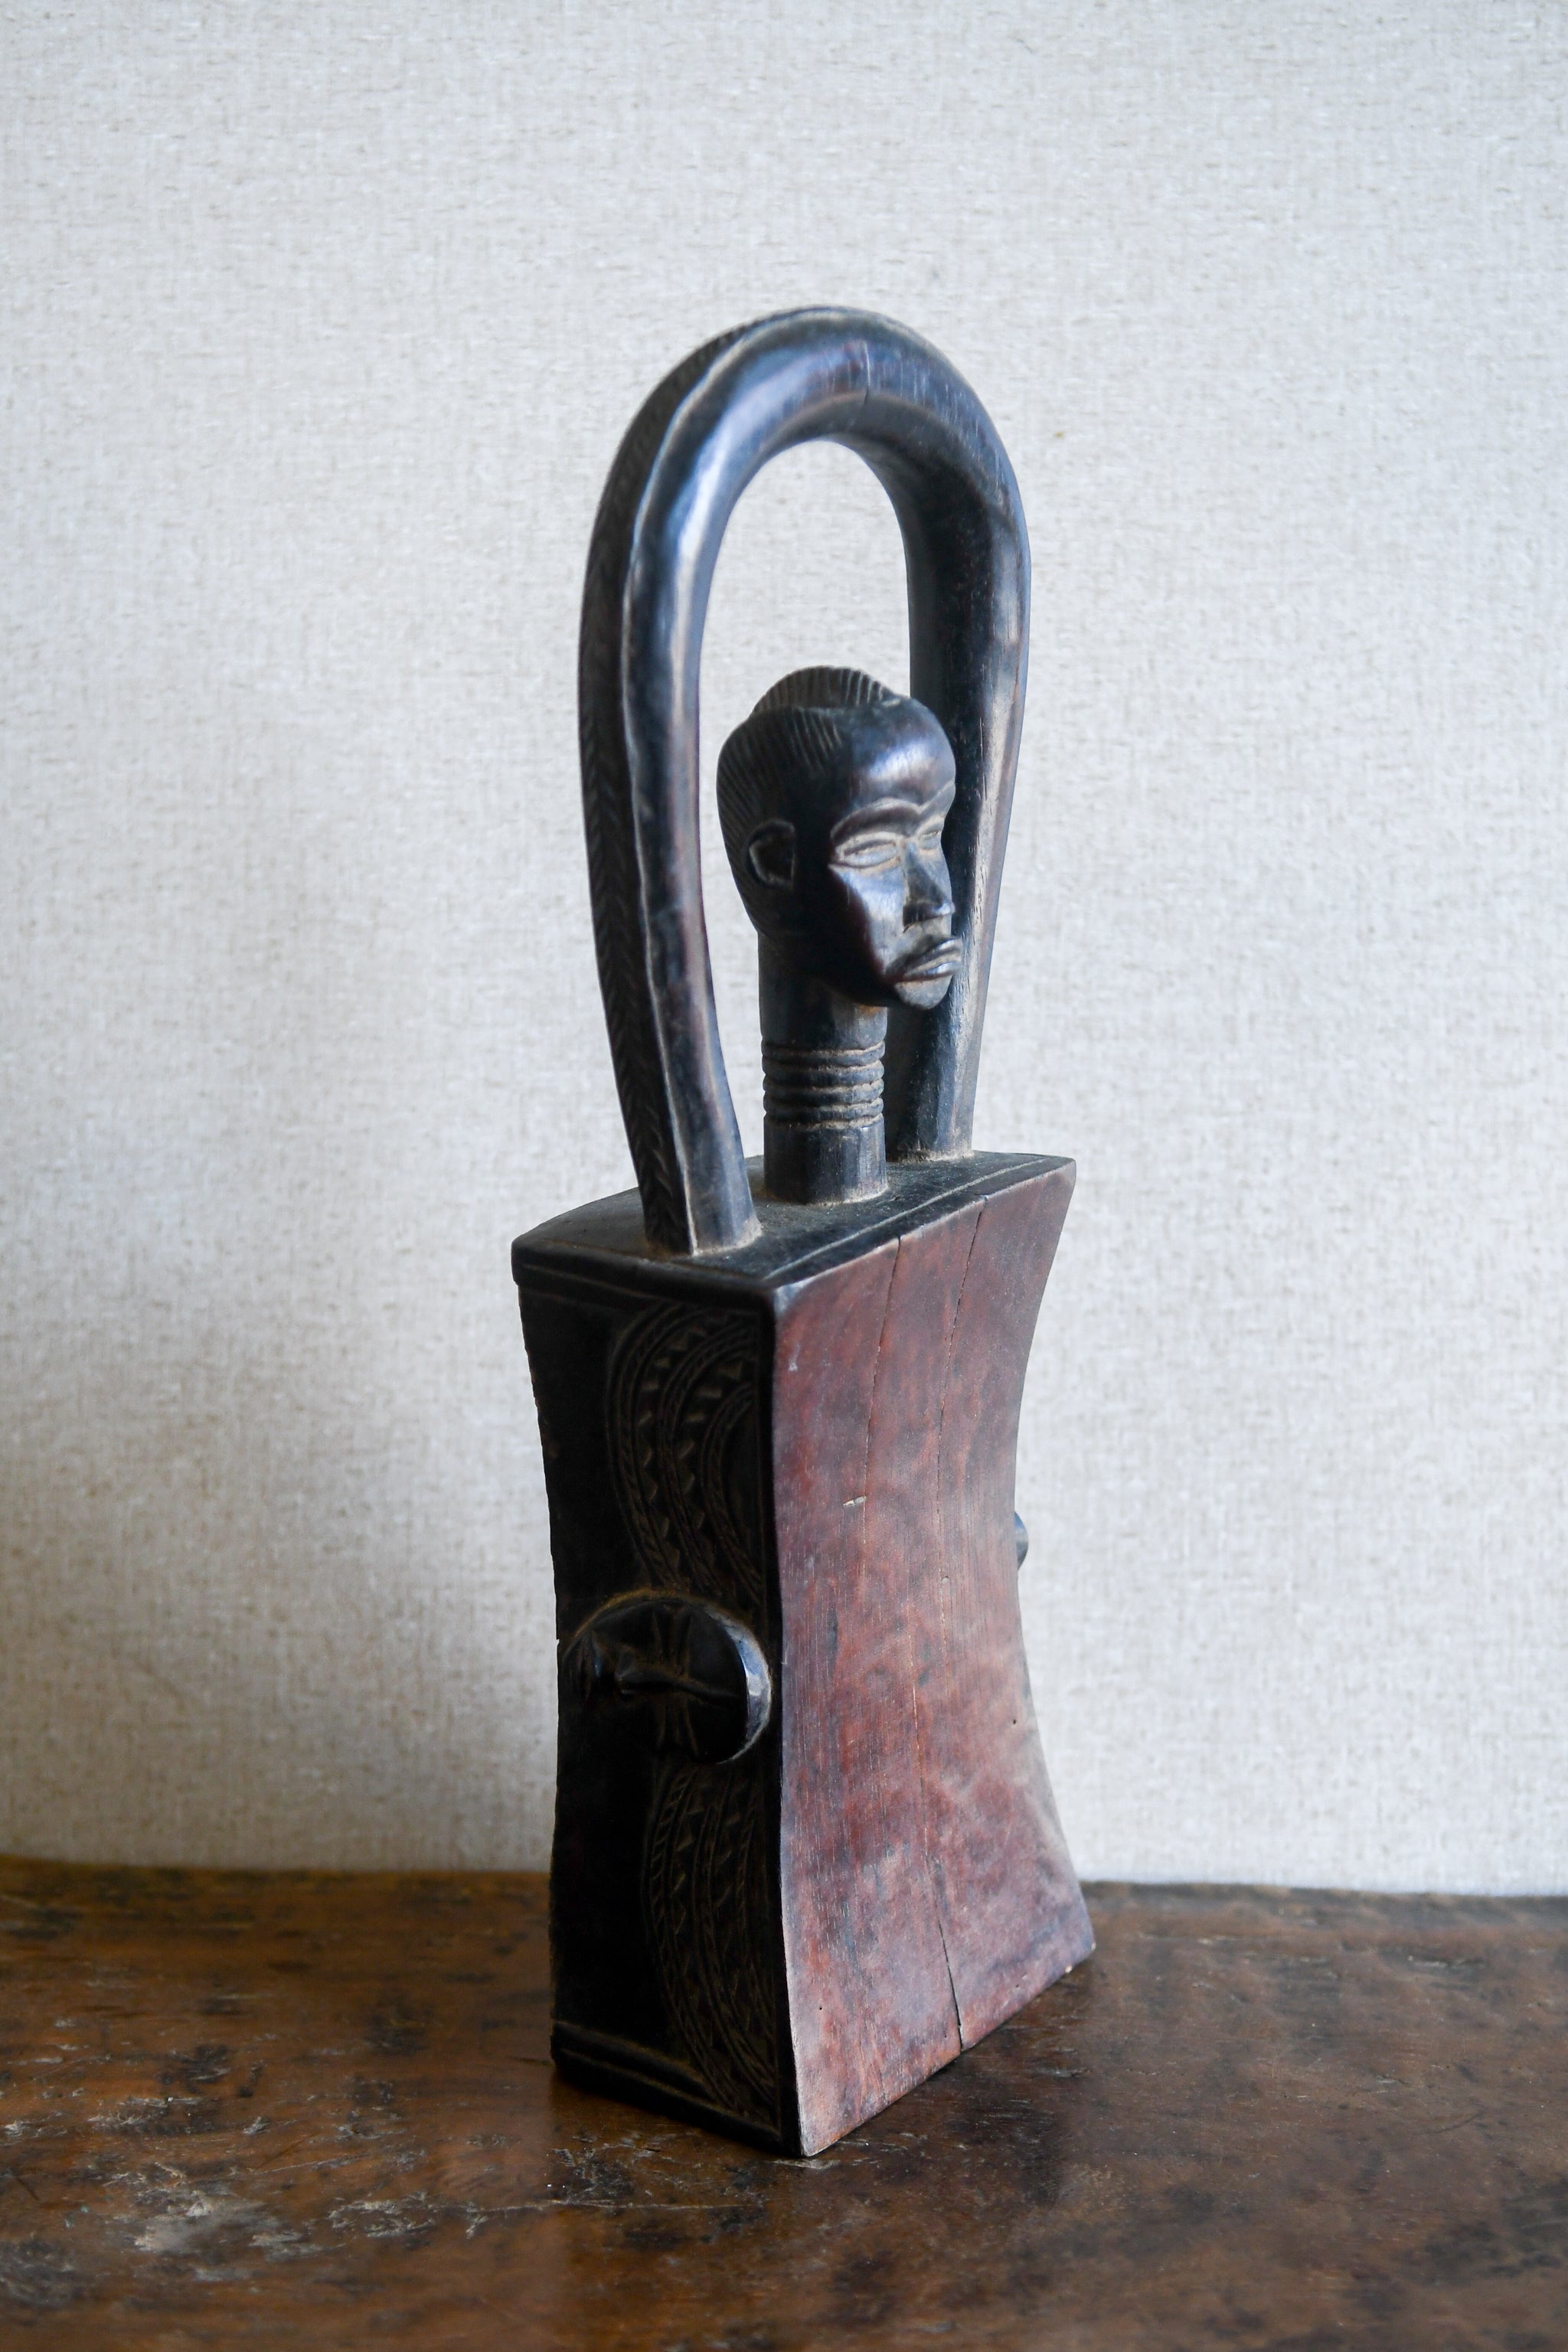 Tribal Objects  - Artwork - African - Folk Art - Artifacts - Dan - Headrest -  Wood -  Used - Sculpture - Collectible